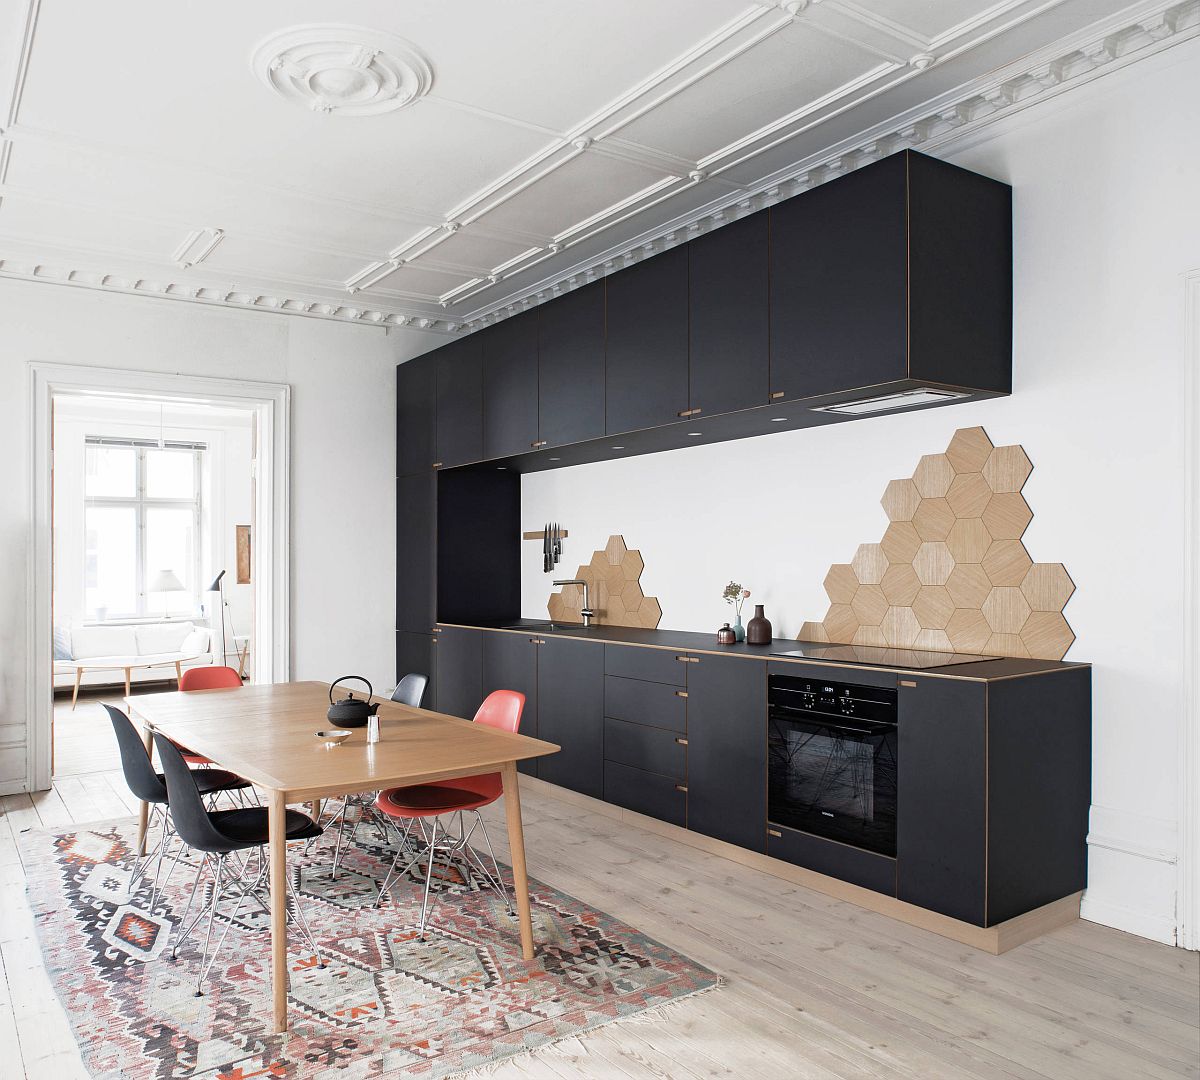 Sleek and stunning single-wall kitchen design with minimal, Scandinavian style